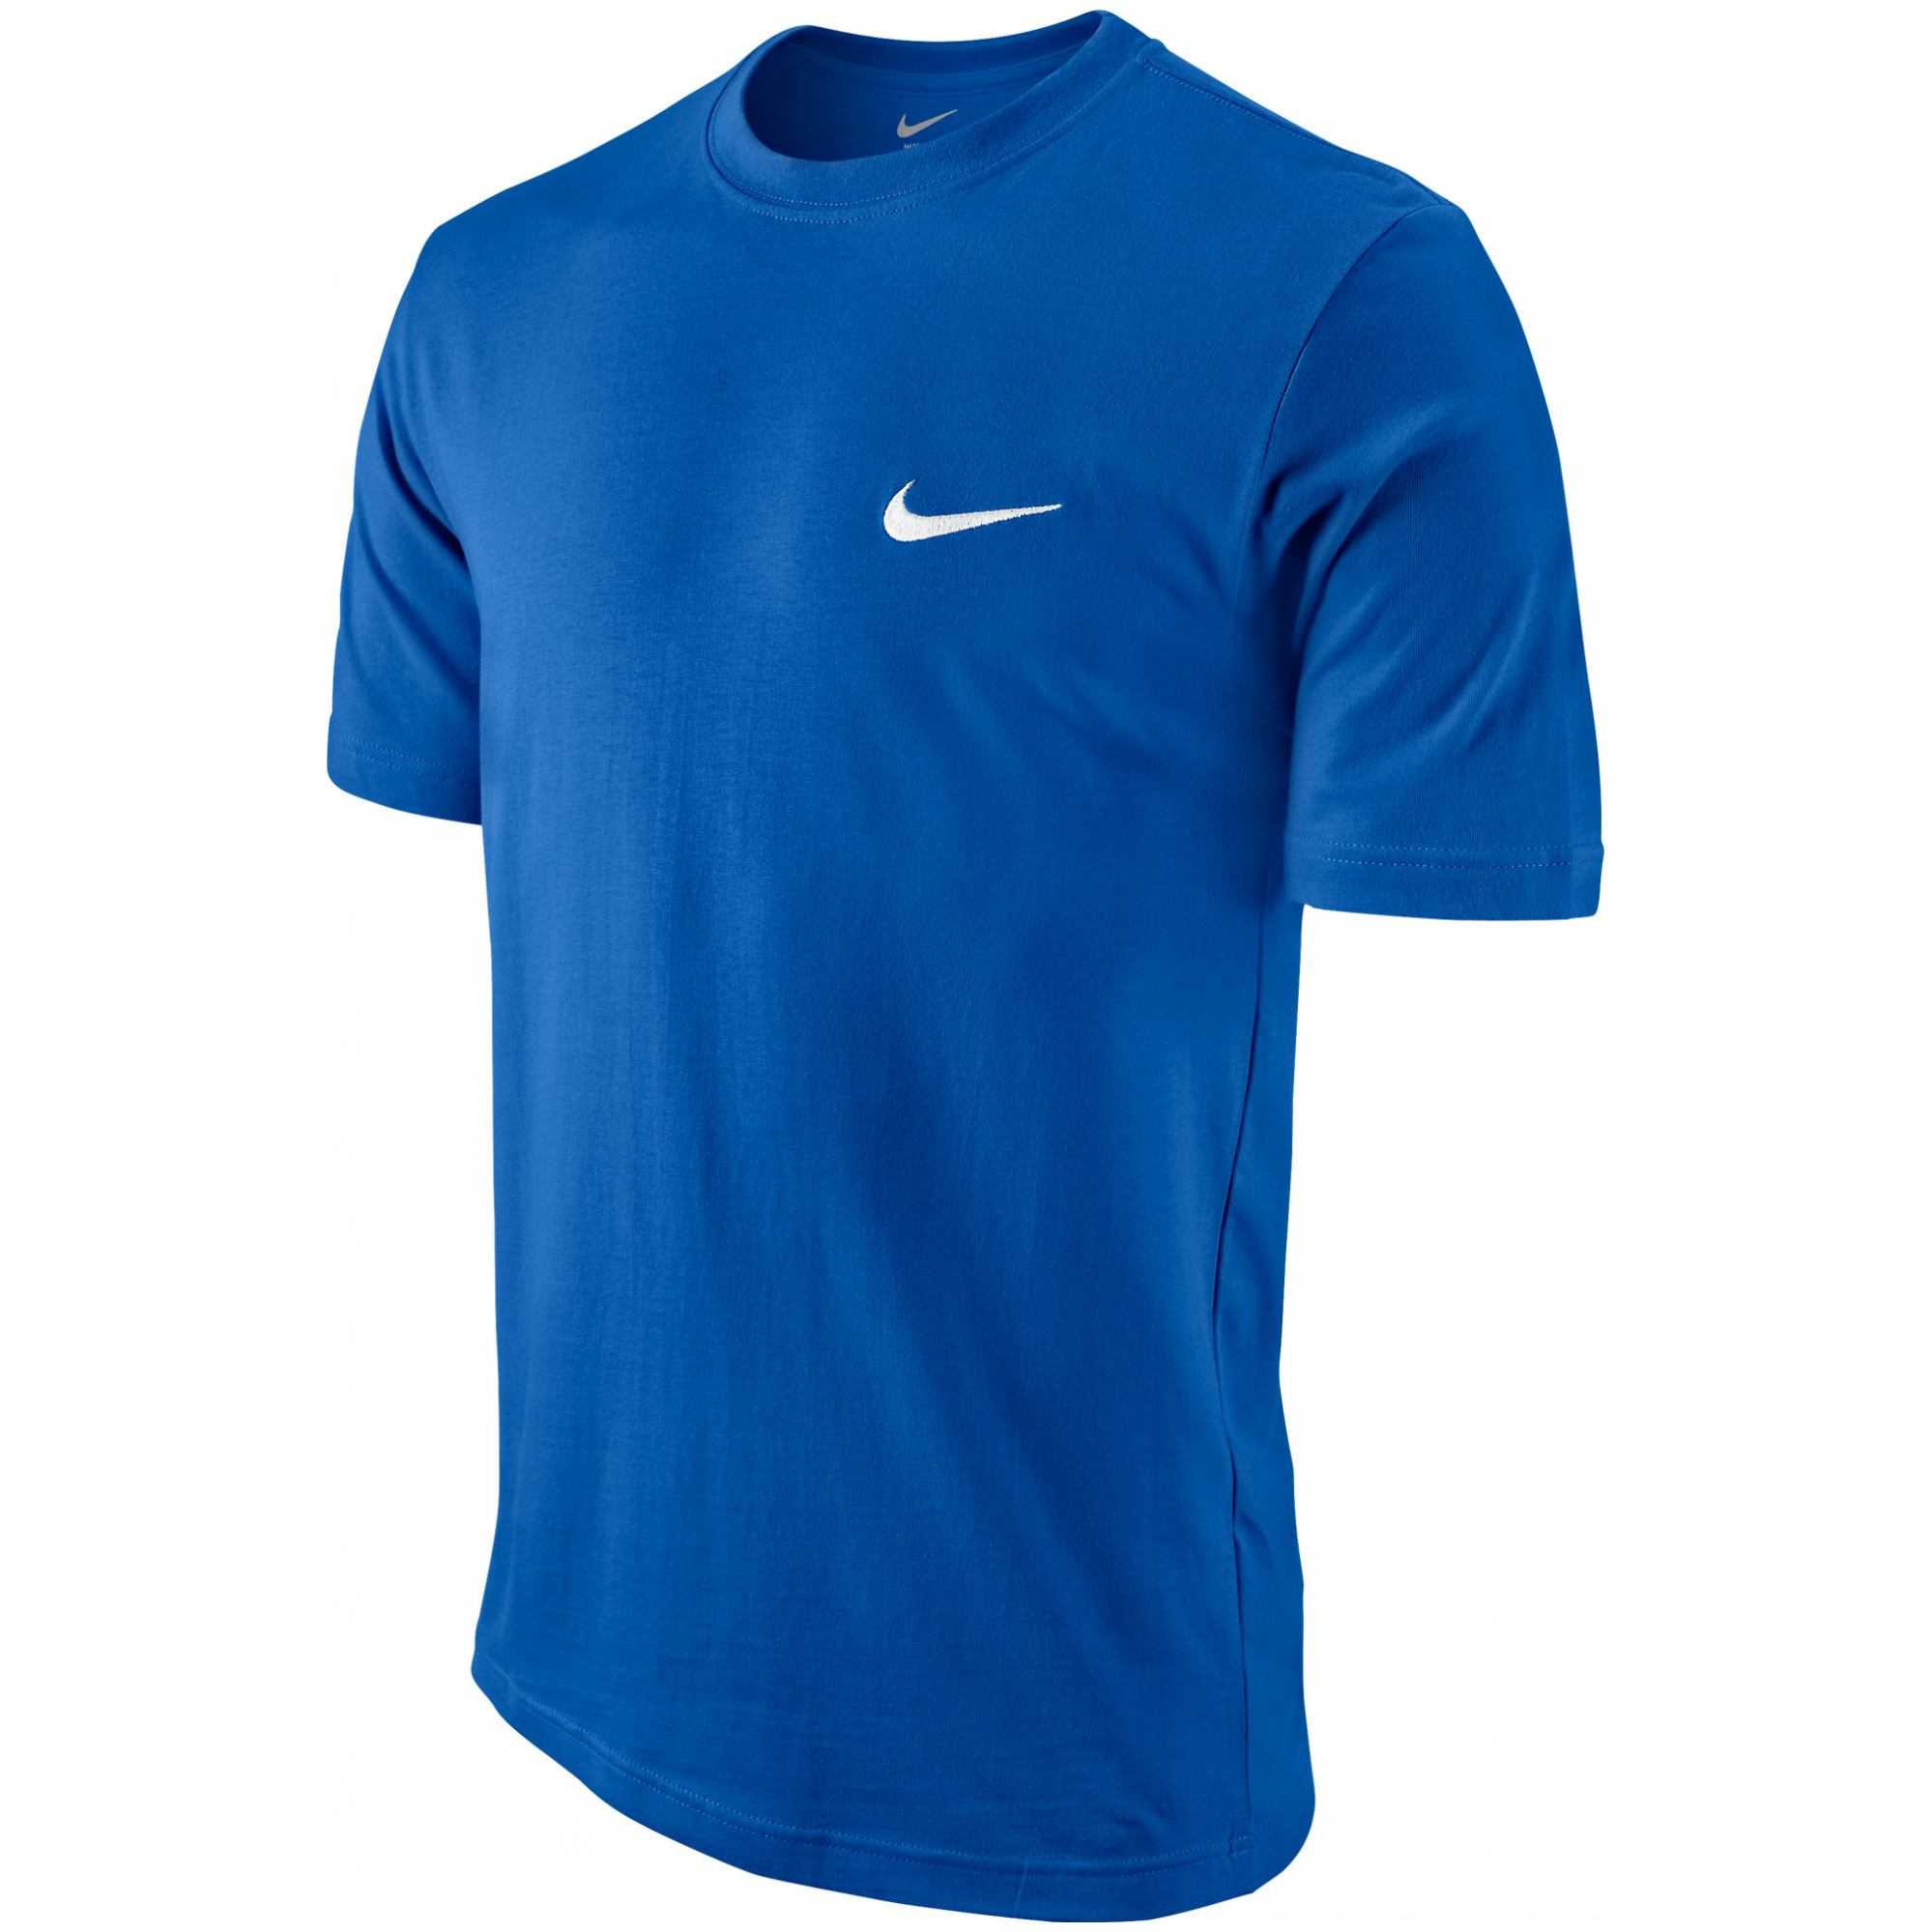 454798-463 Nike футболка